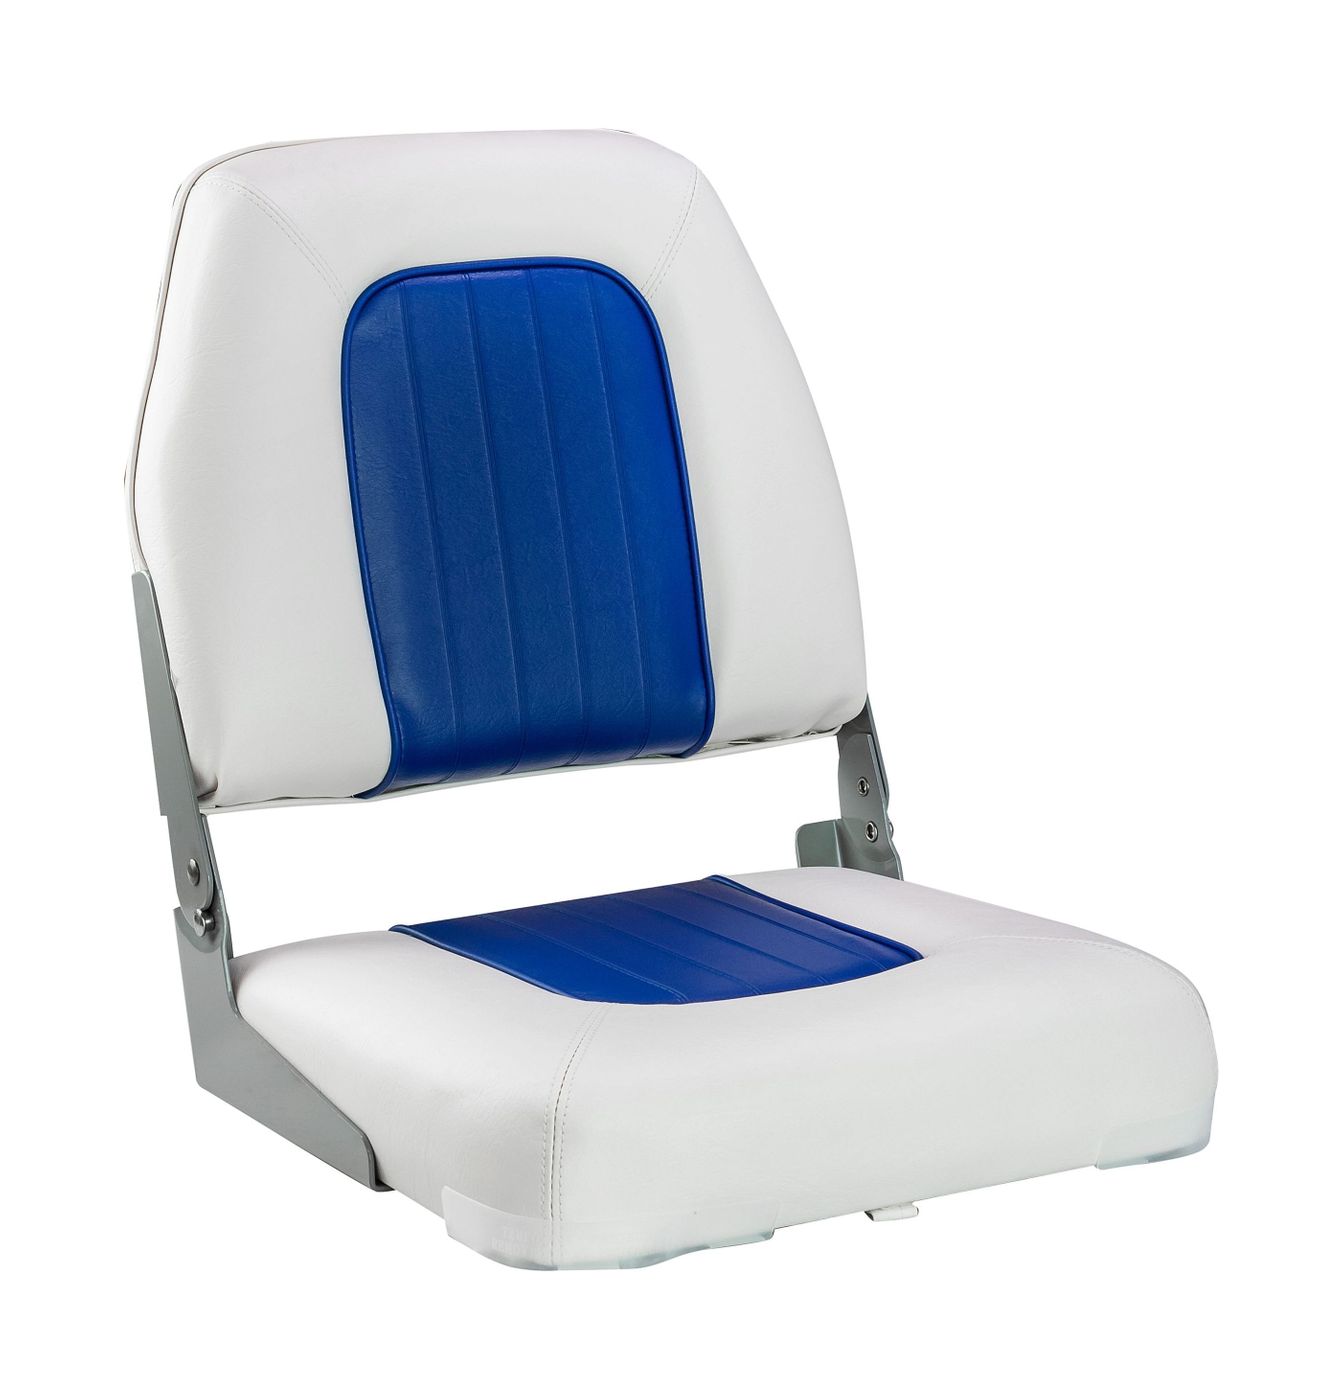 Кресло мягкое складное Deluxe, обивка винил, цвет белый/синий, Marine Rocket 75137WB-MR сиденье мягкое pro casting обивка синий винил 75104b